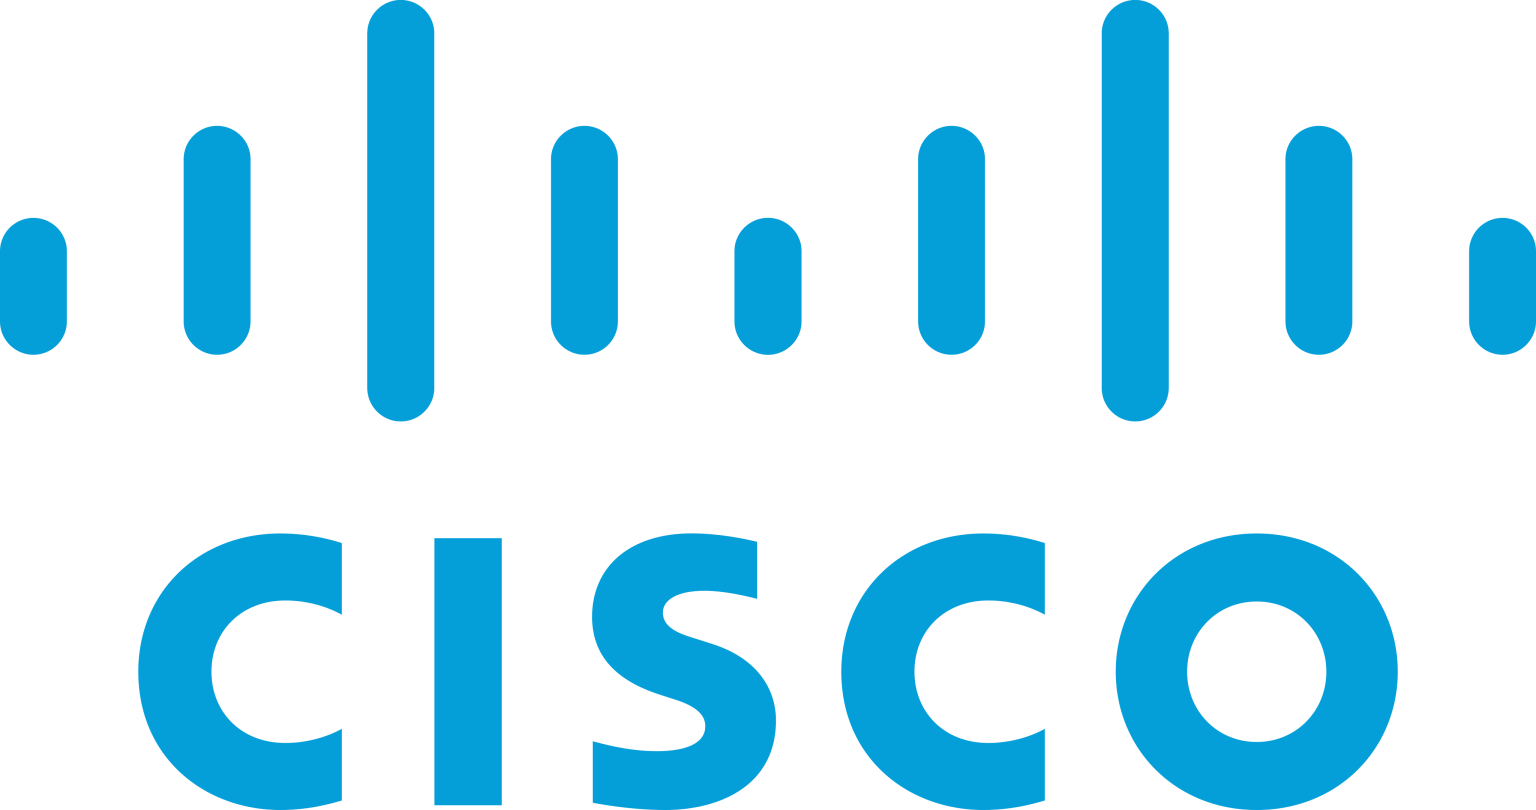 cisco-logo-16-1536x810